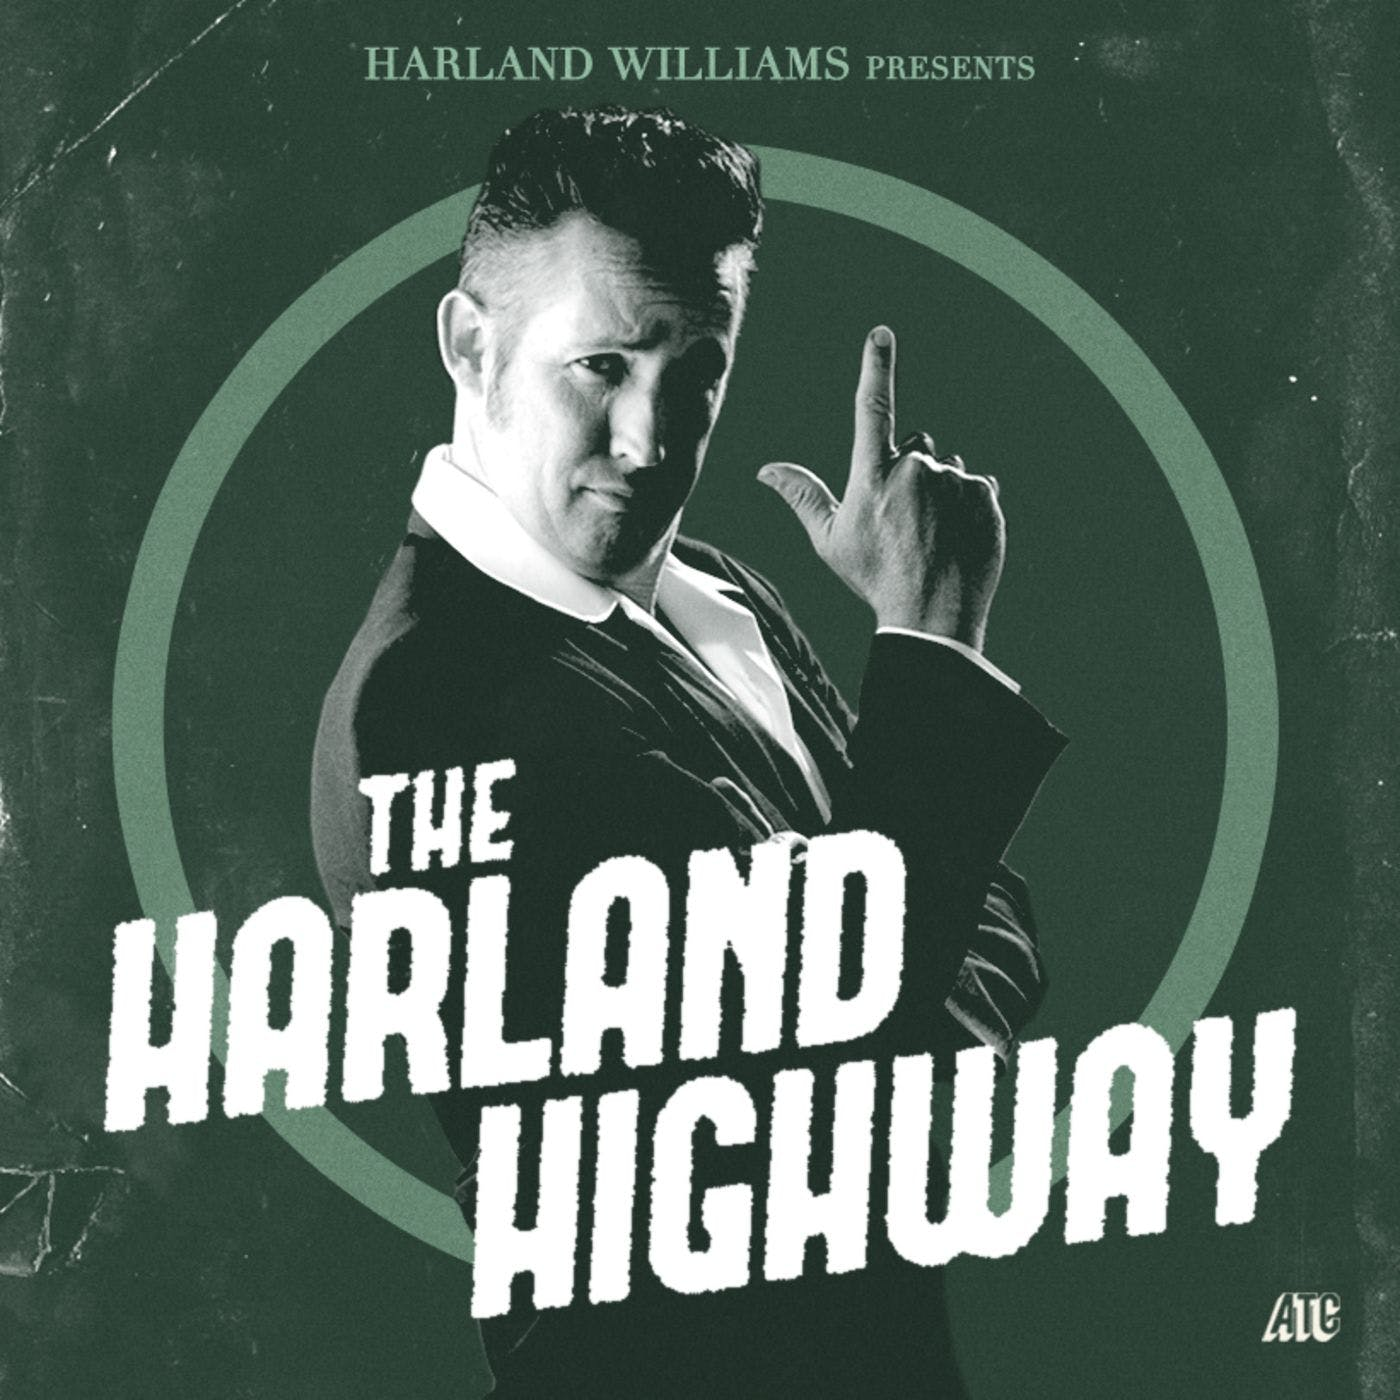 796 - BBQ Eddy returns. Harland is a THIEF. Death by music!